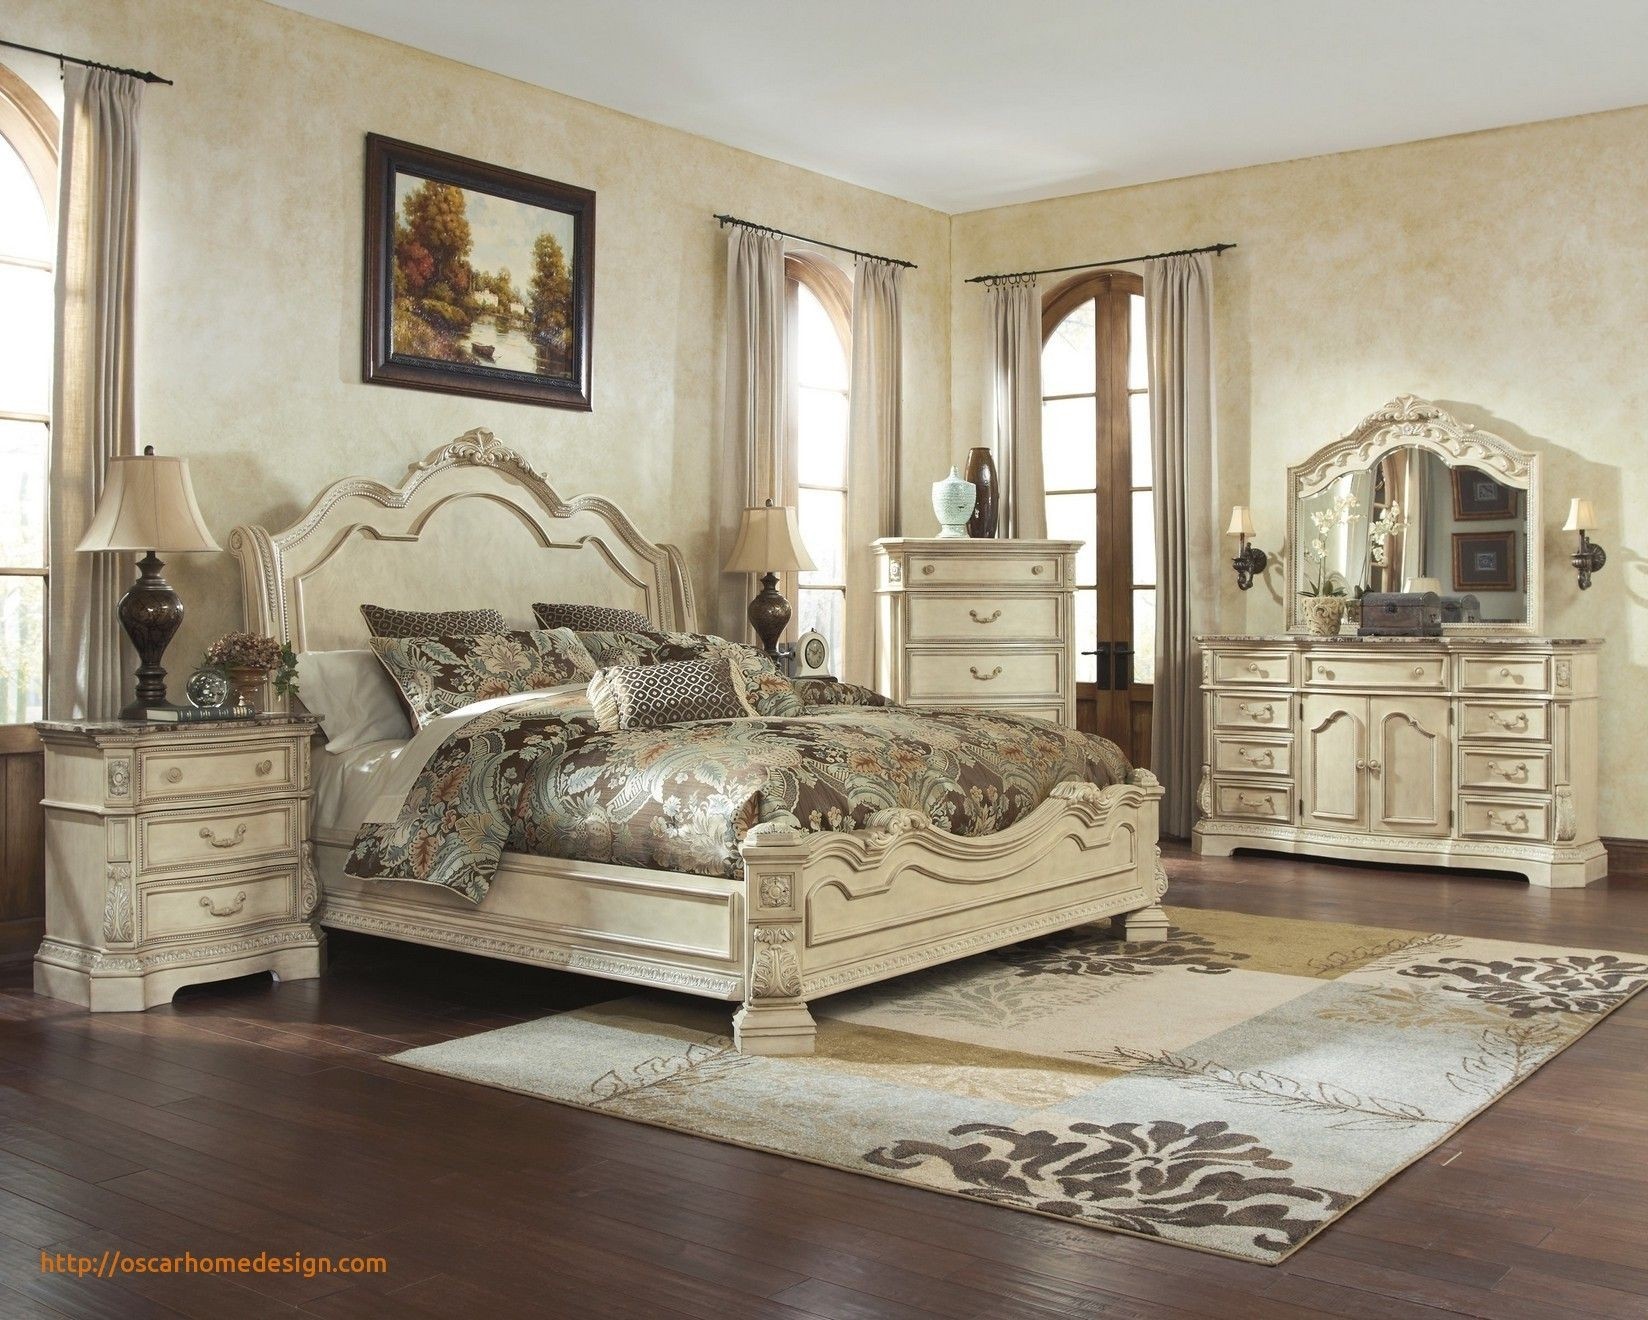 Beautiful rustic bedroom ideas distressed white bedroom